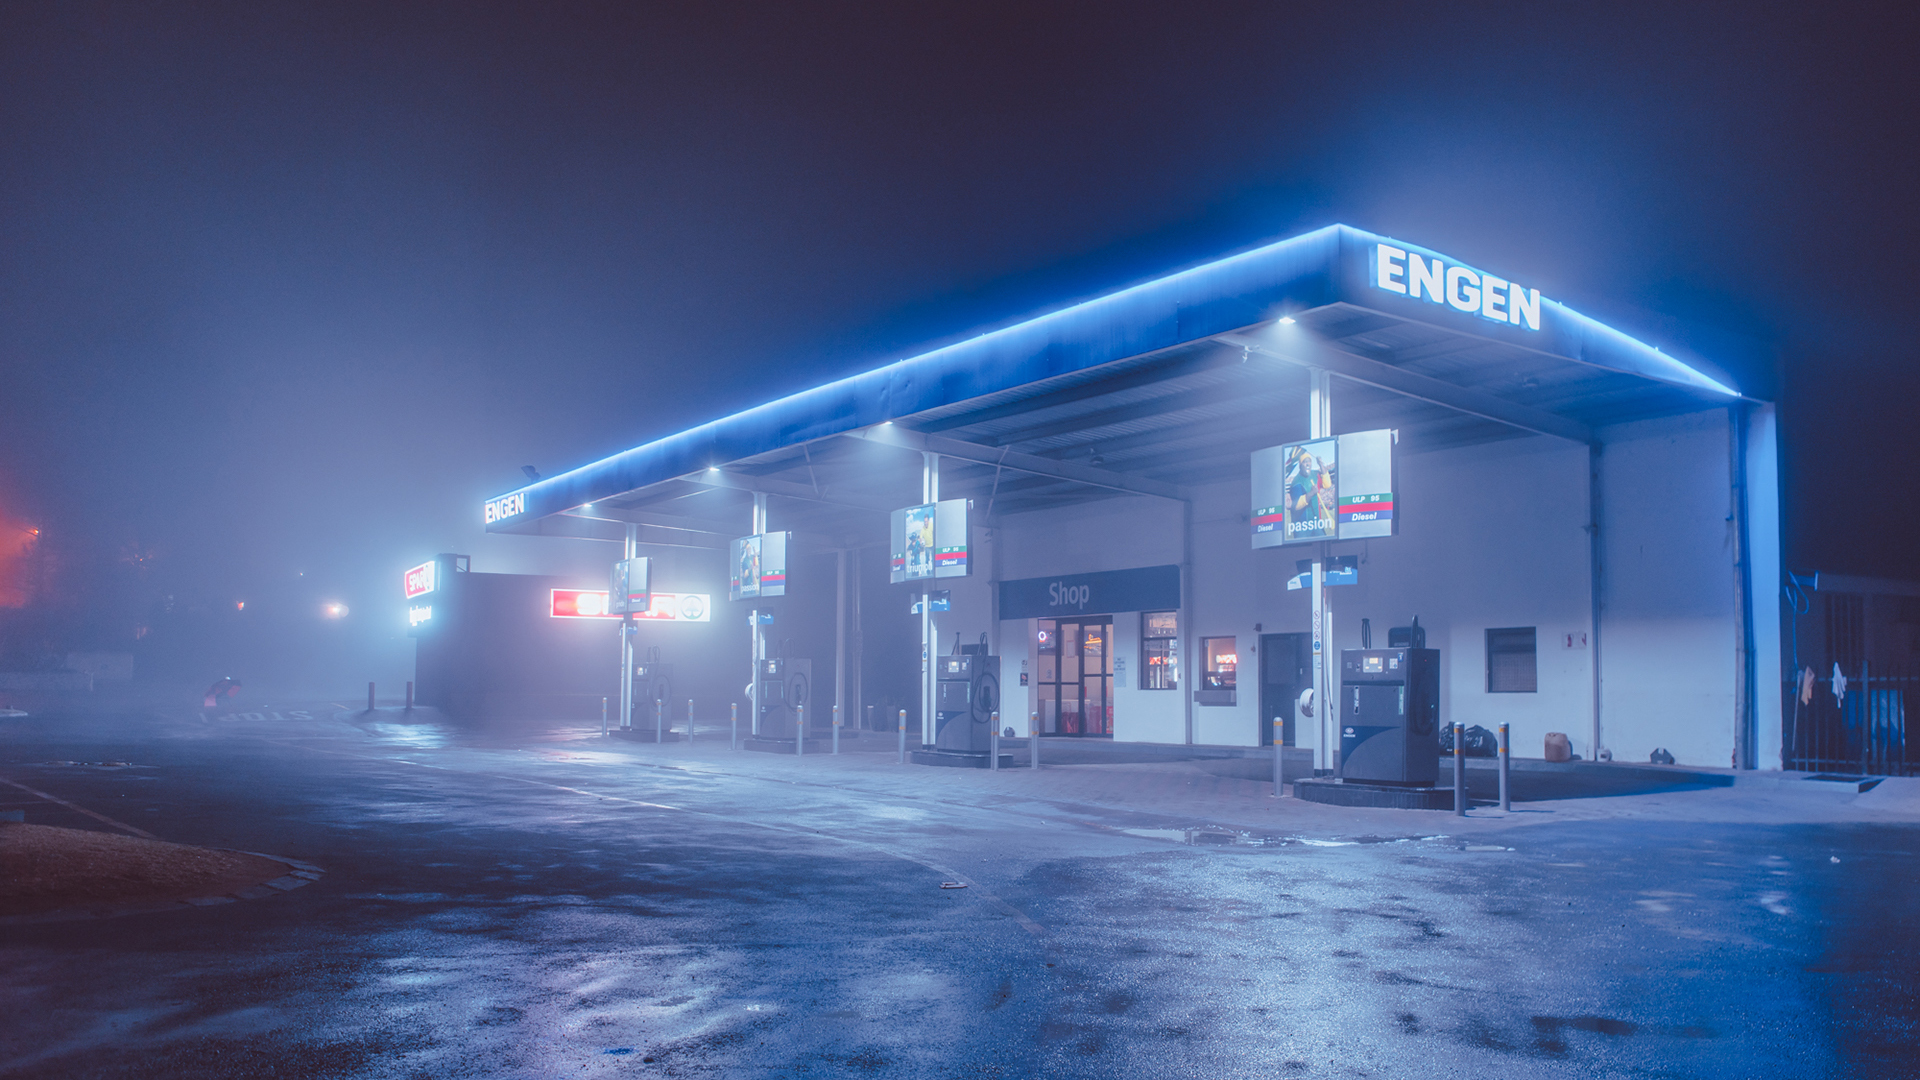 General 1920x1080 night street neon Elsa Bleda gas station long exposure street light mist